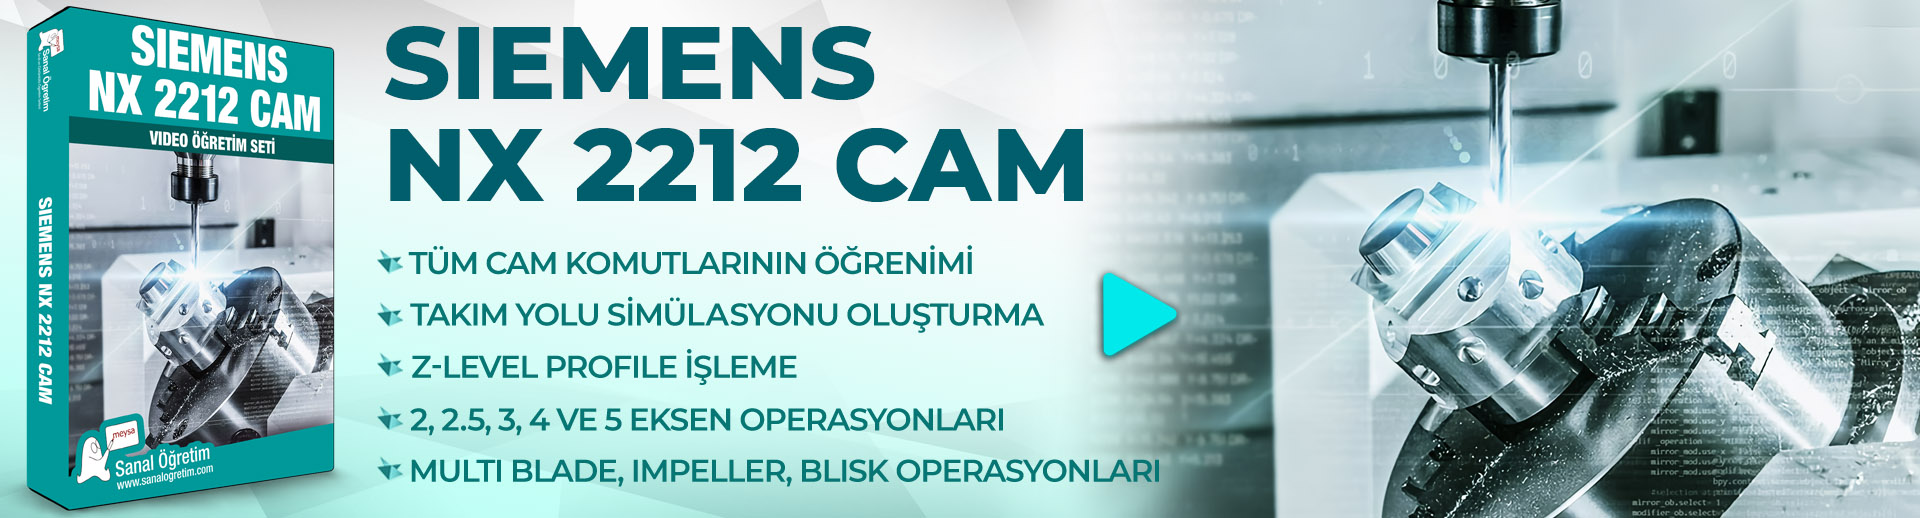 Siemens NX 2212 CAM